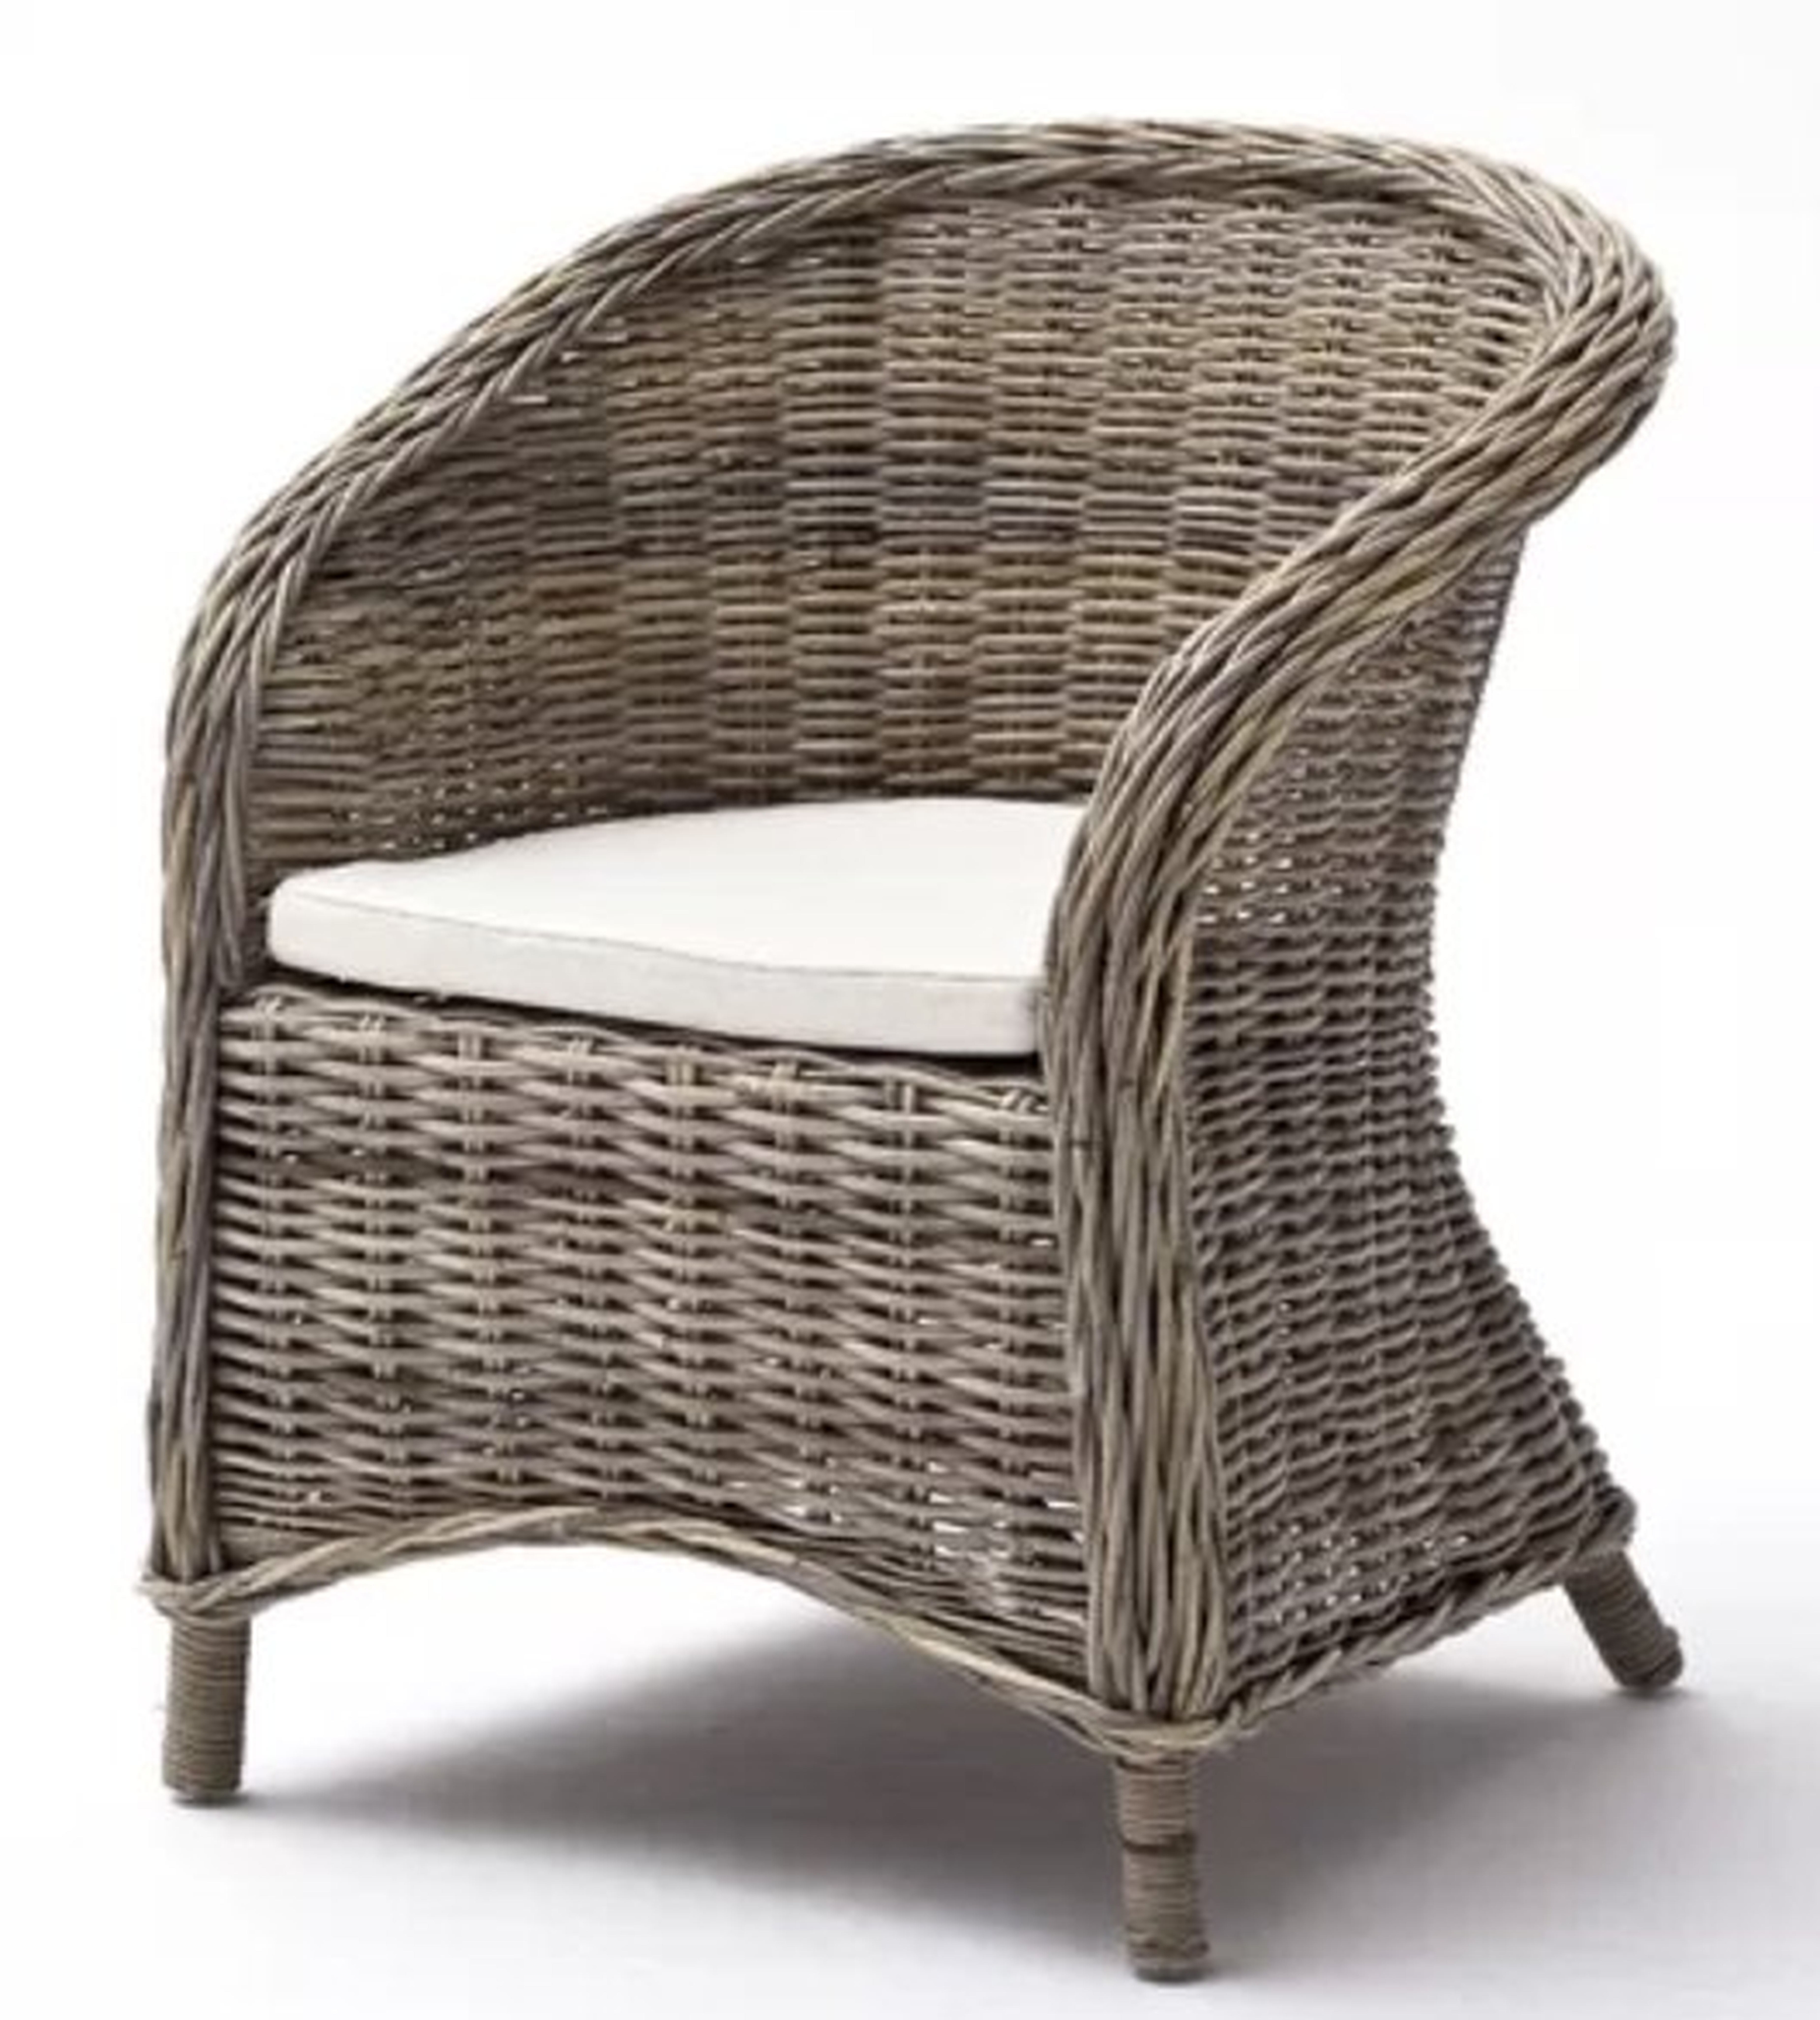 Leverett Arm Chair in Natural Gray (Set of 2) - Wayfair